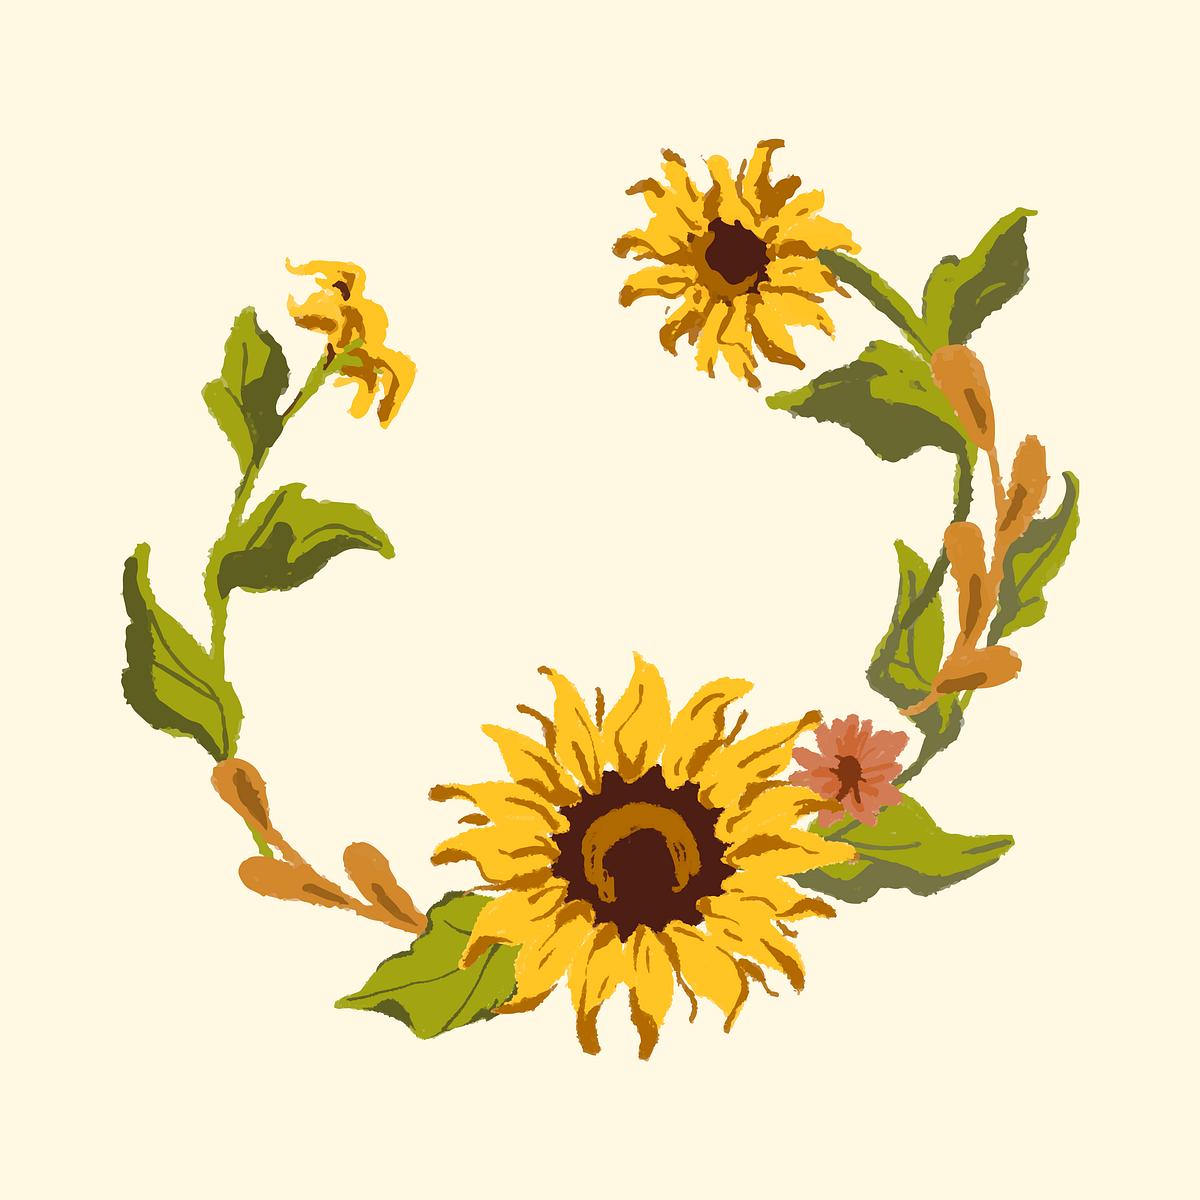 Download Sunflower wreath | Free stock illustration - 558710